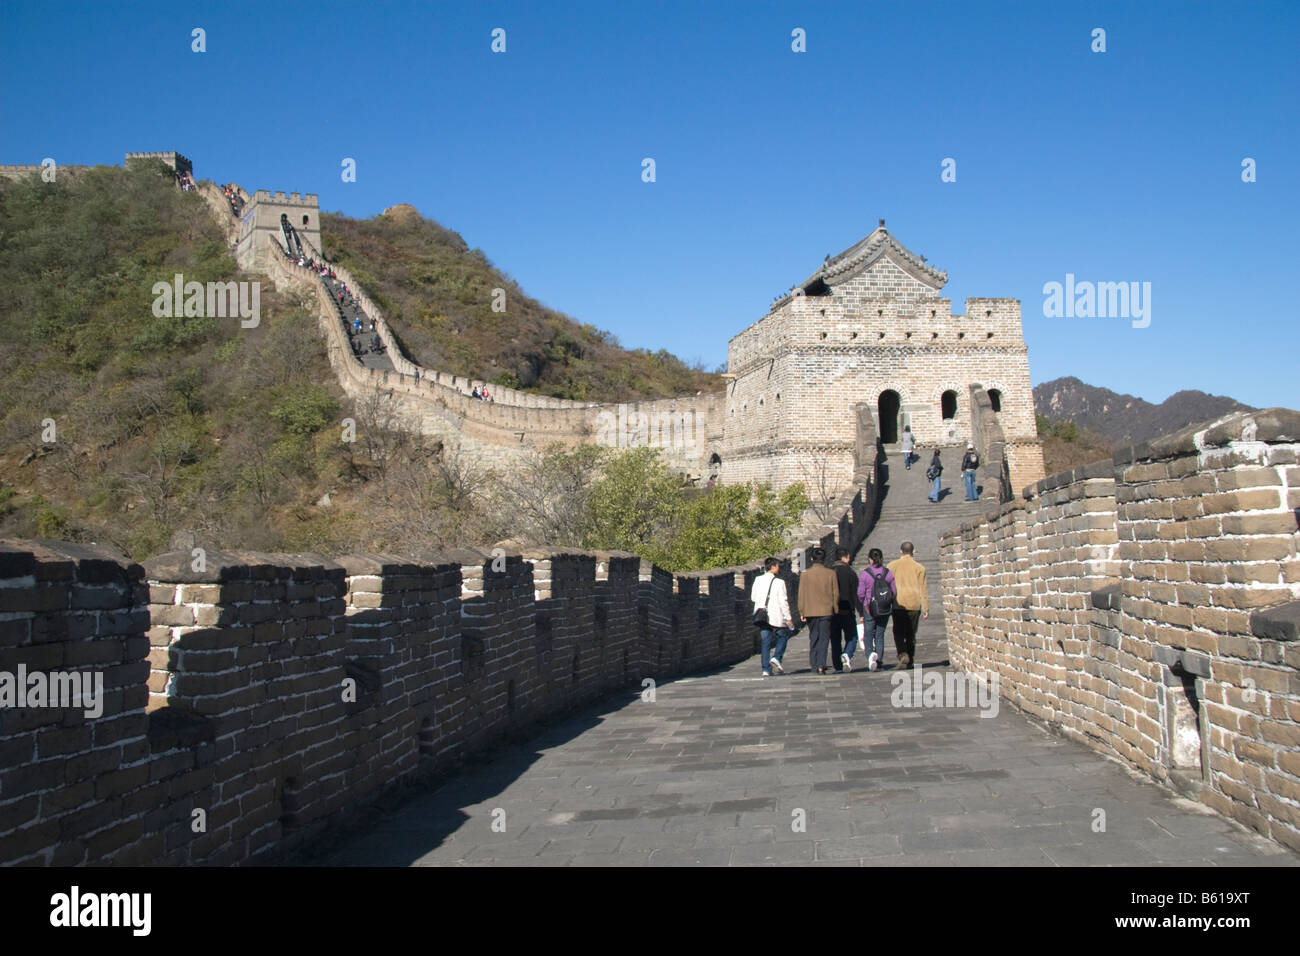 The Great Wall at Mutianyu, Beijing, China Stock Photo